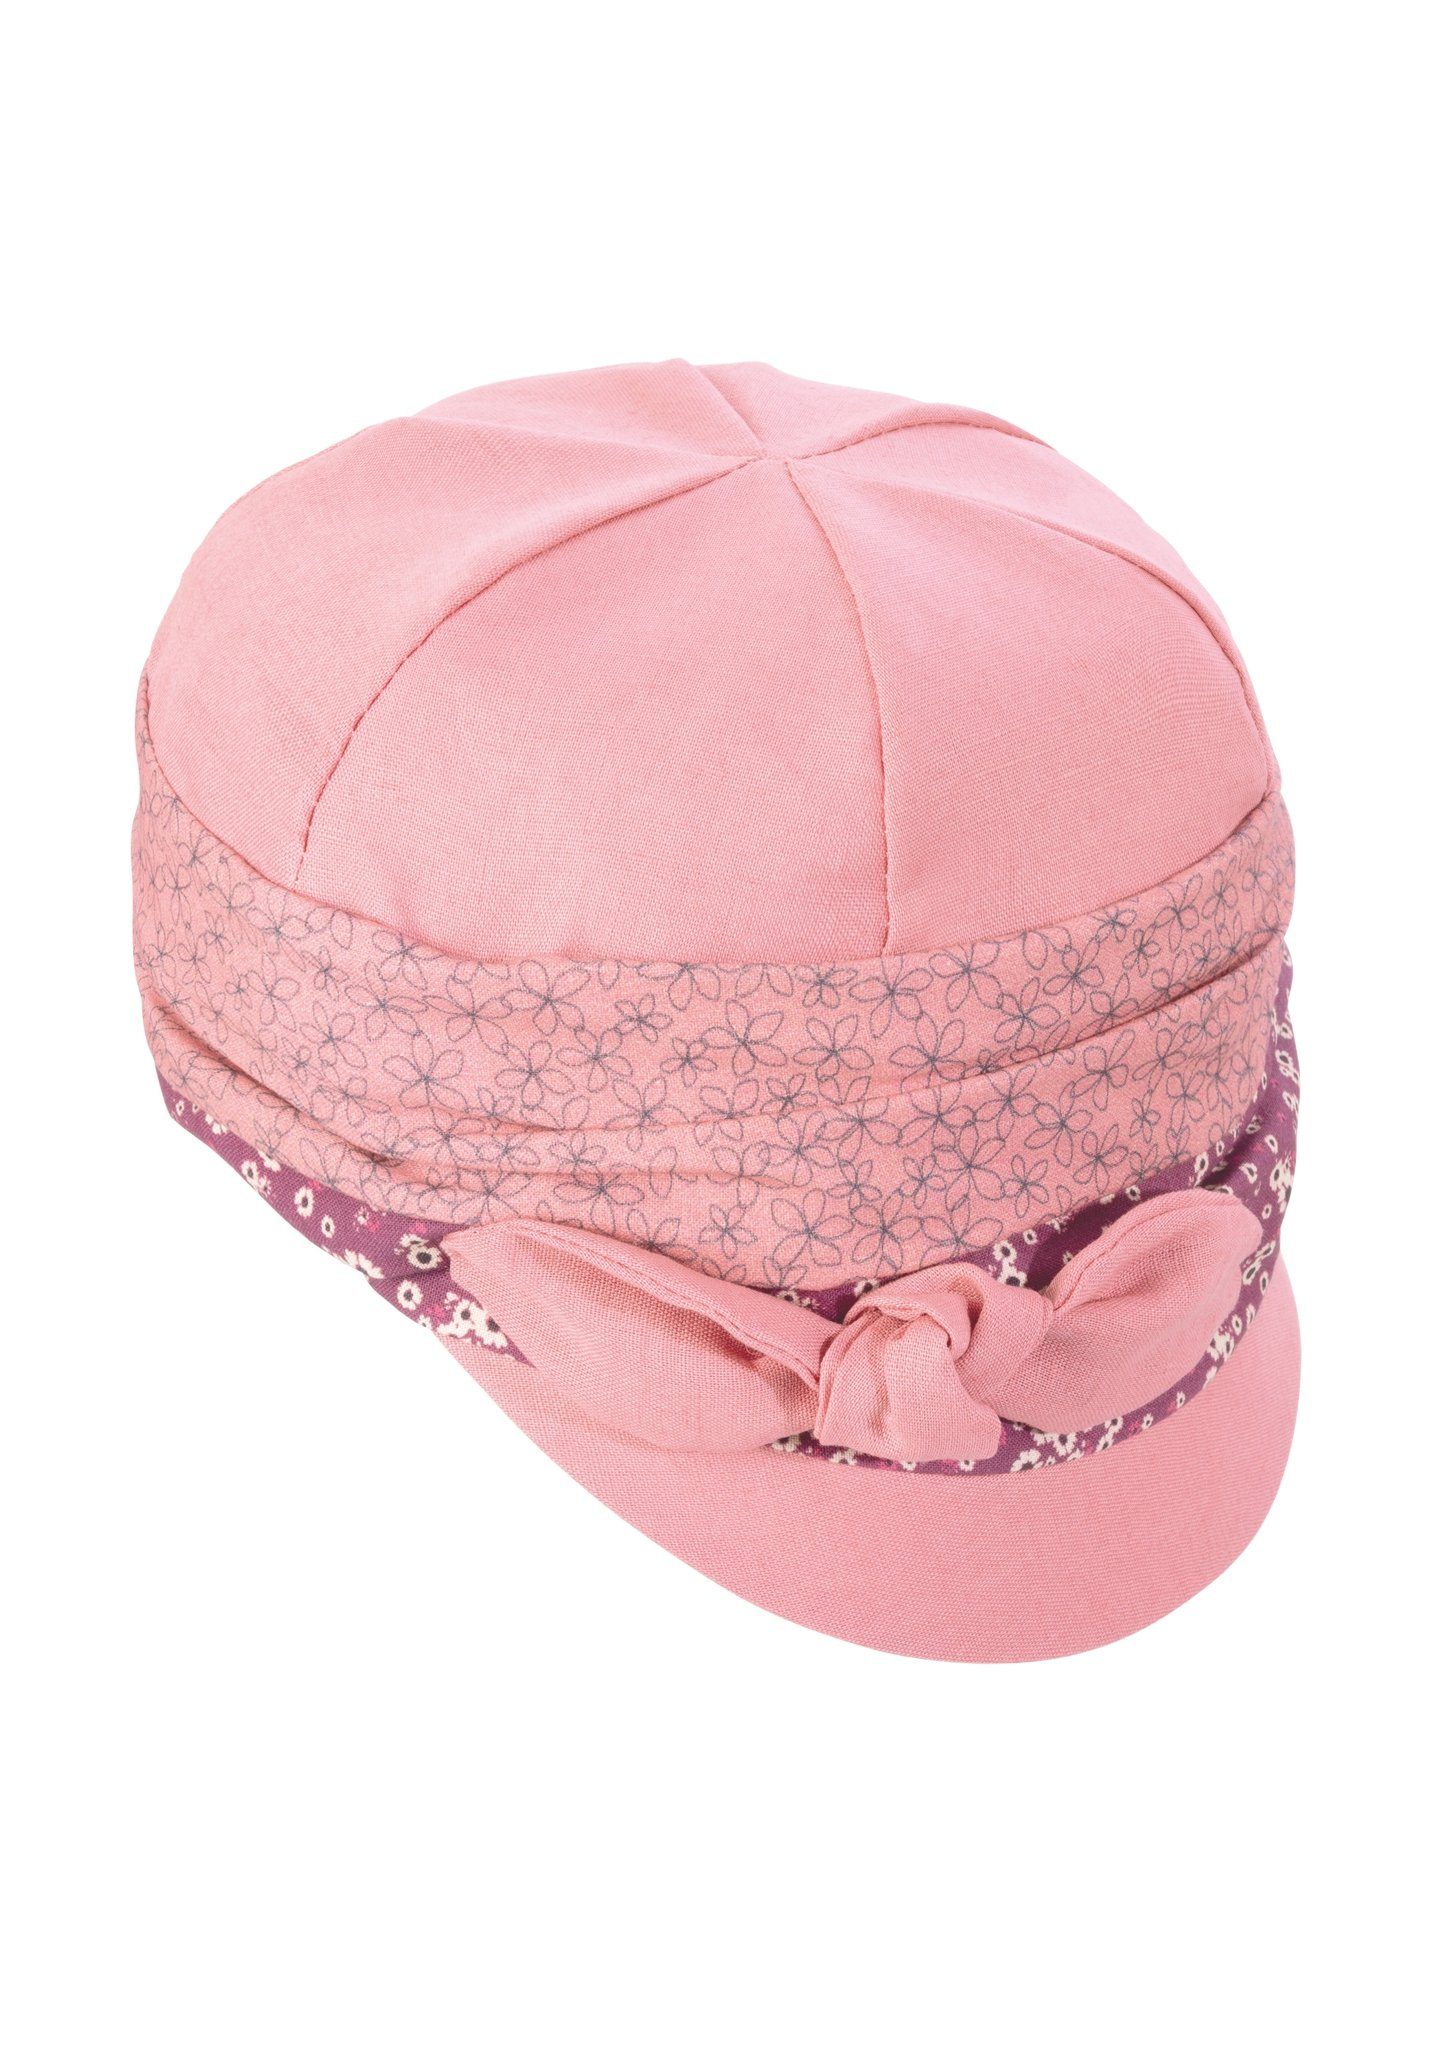 Chaplino Jerseymütze mit floralen Mustern rosa | Mützen